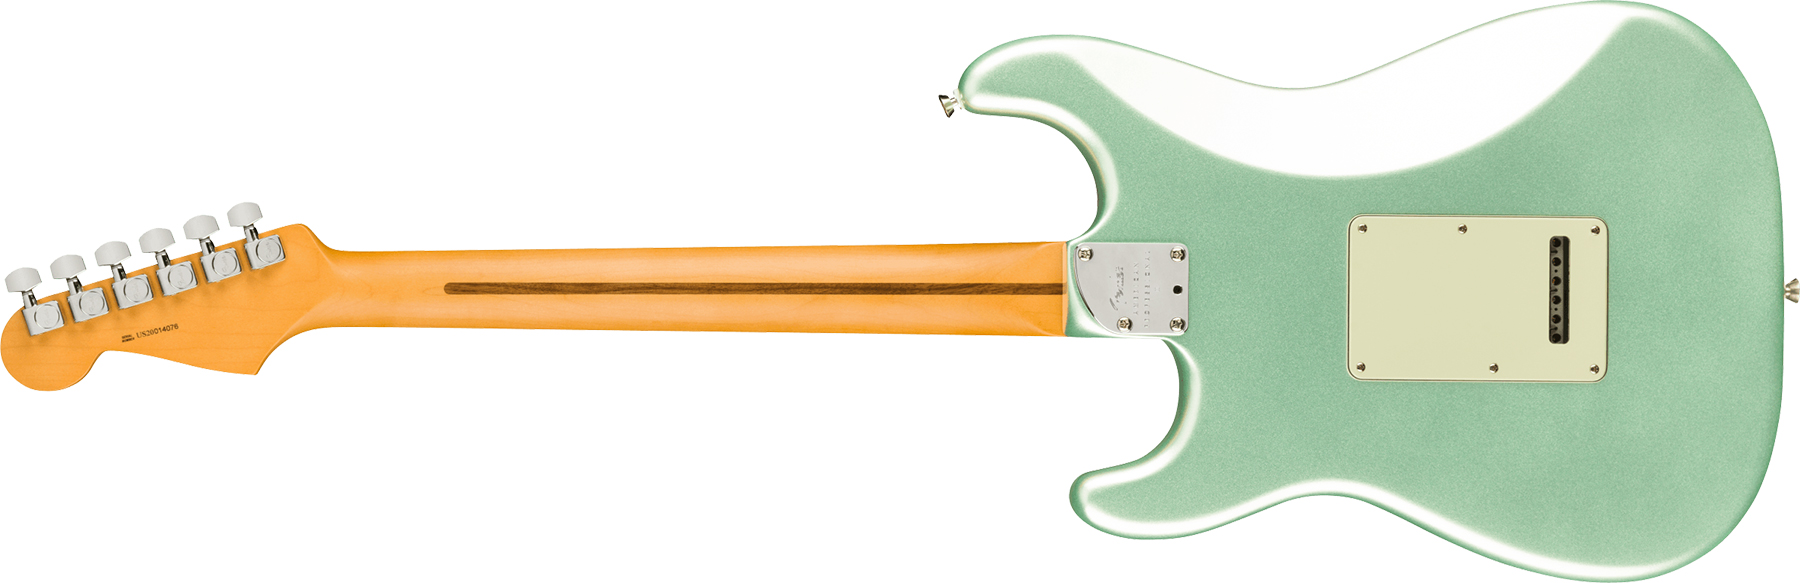 Fender Strat American Professional Ii Usa Rw - Mystic Surf Green - Guitarra eléctrica con forma de str. - Variation 1